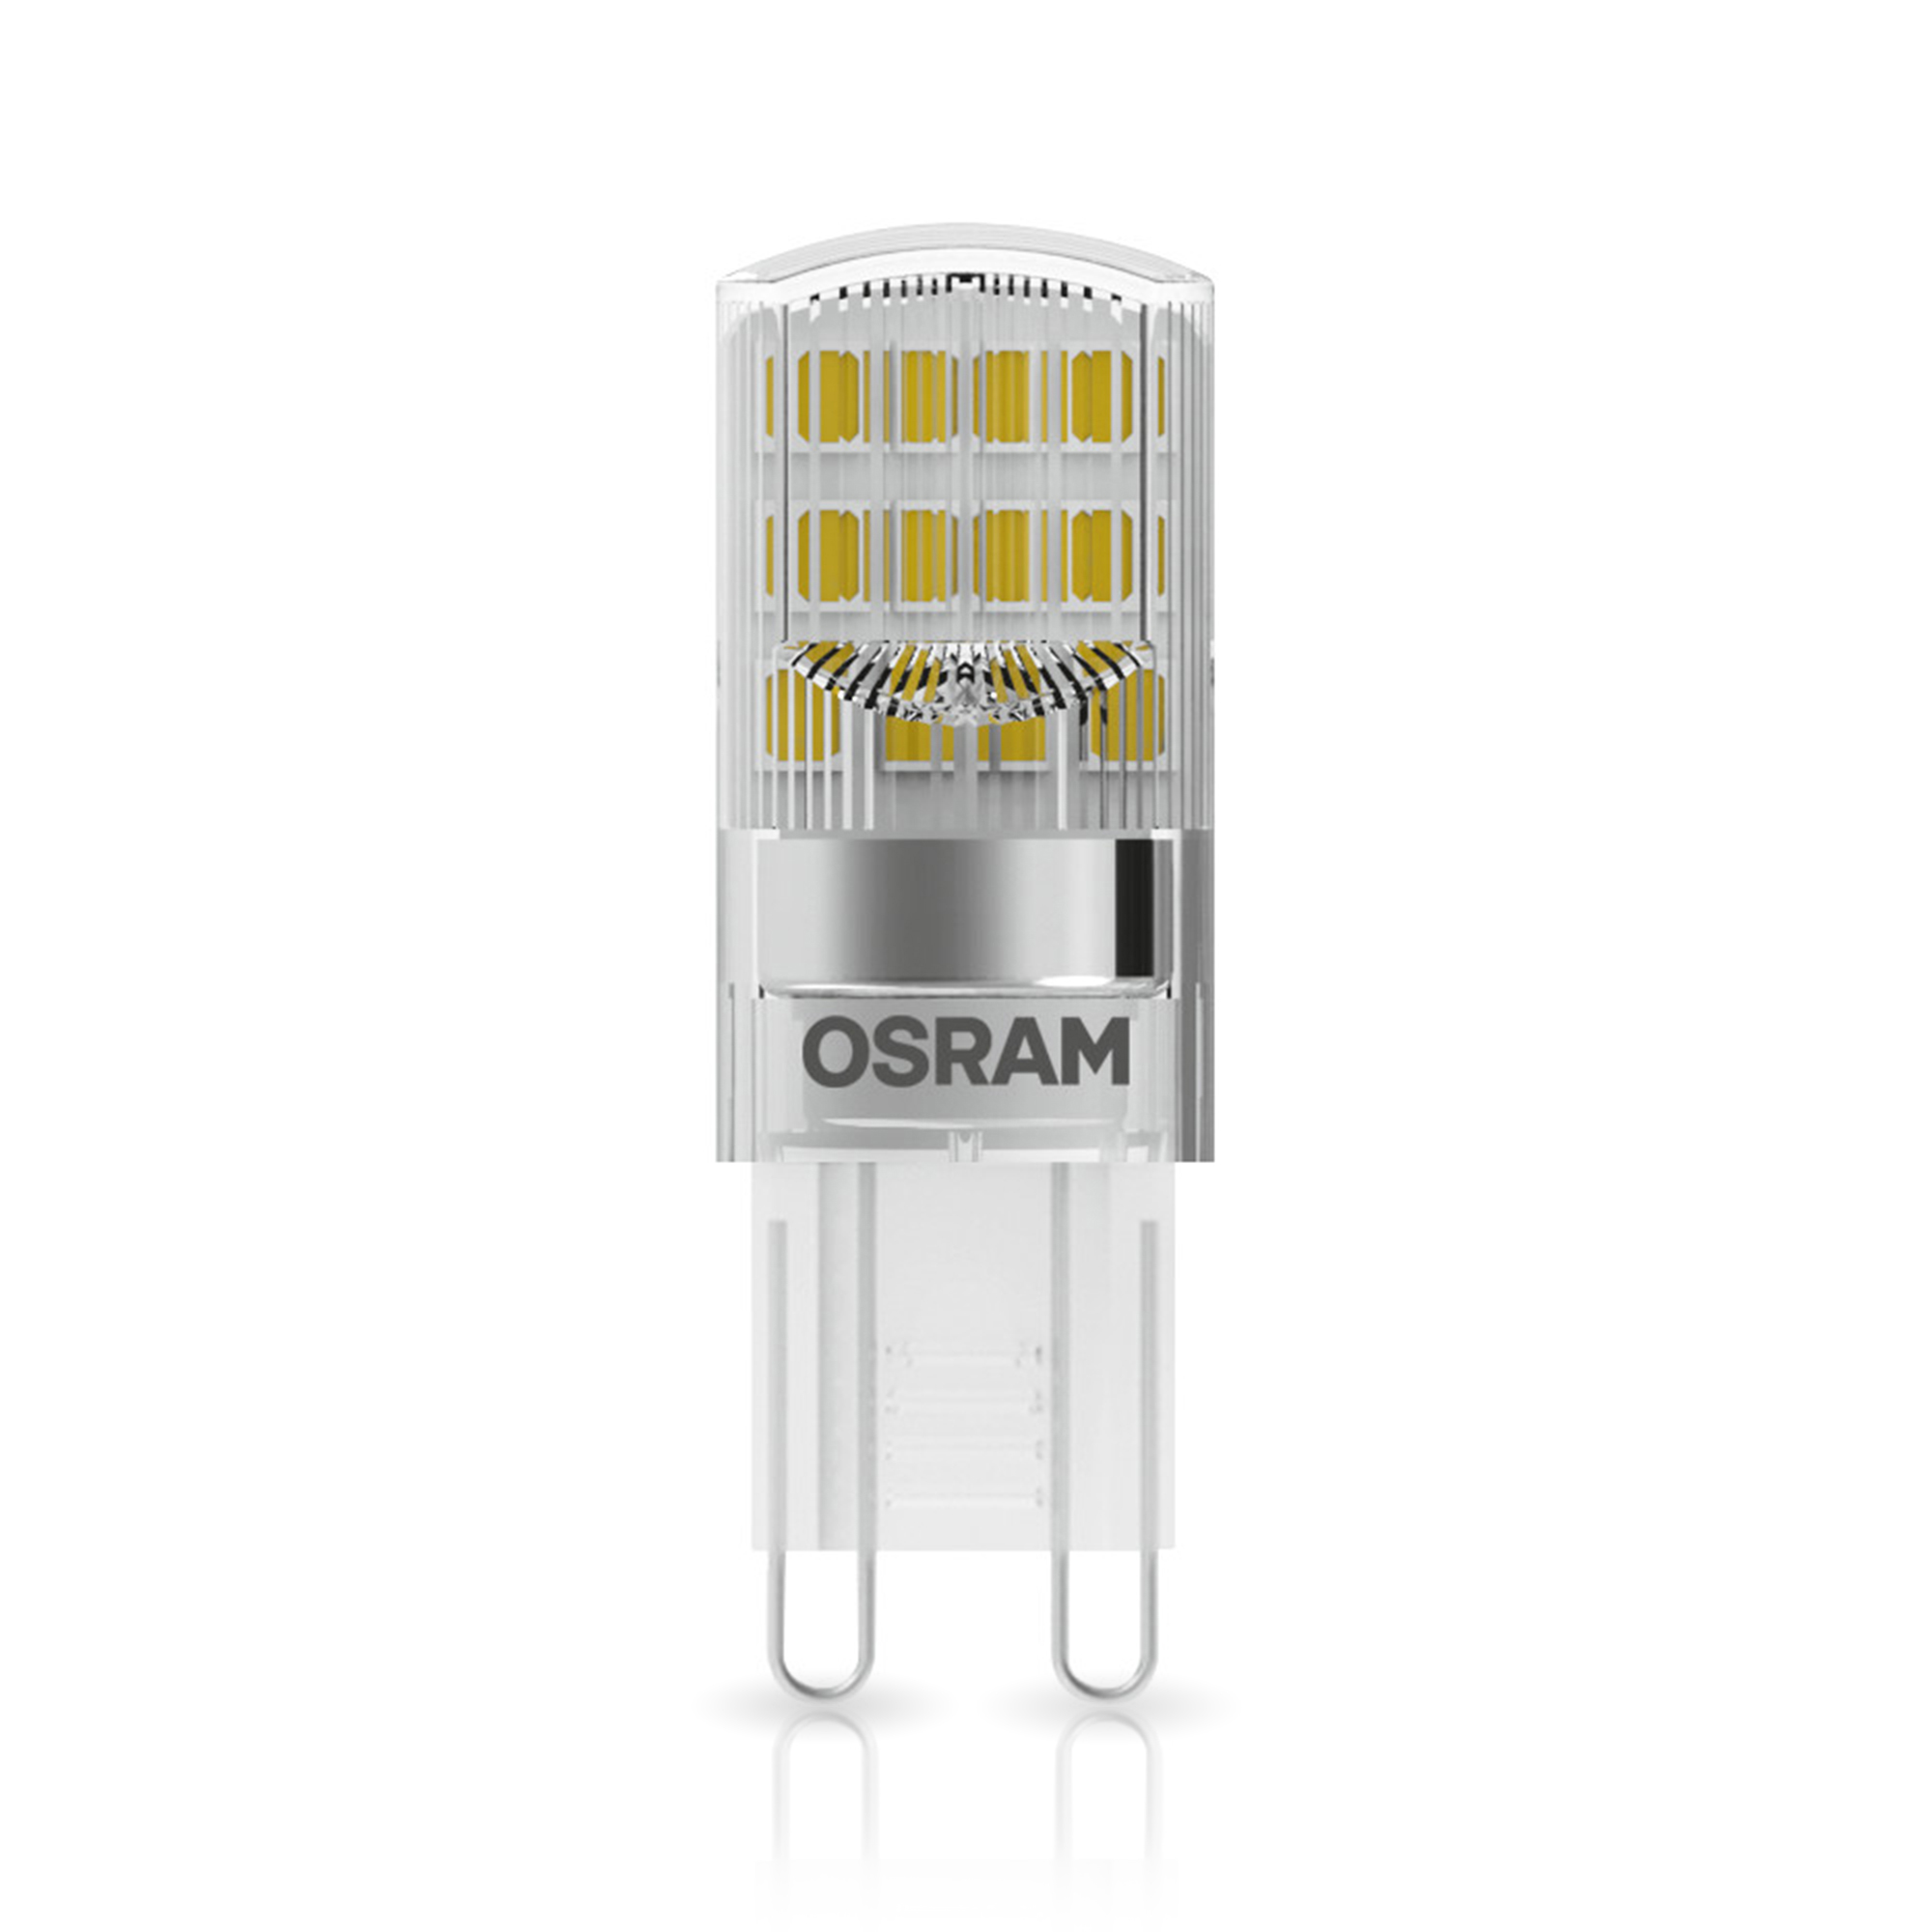 Osram LED STAR PIN 20 clear 1,9W 827 G9 200lm 2700K